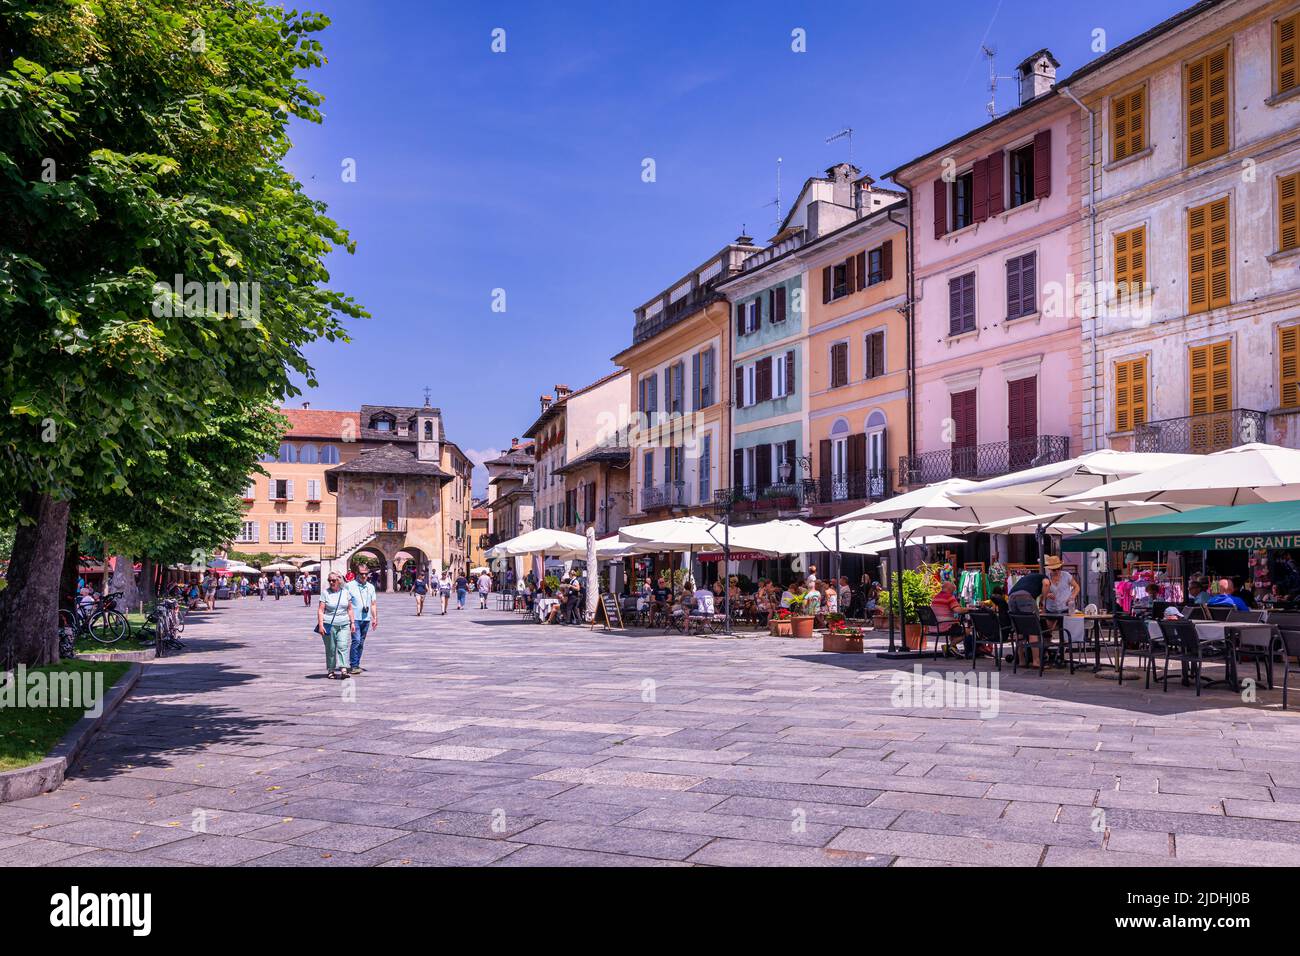 The old town of Orta San Giulio, Piedmont, Italy Stock Photo